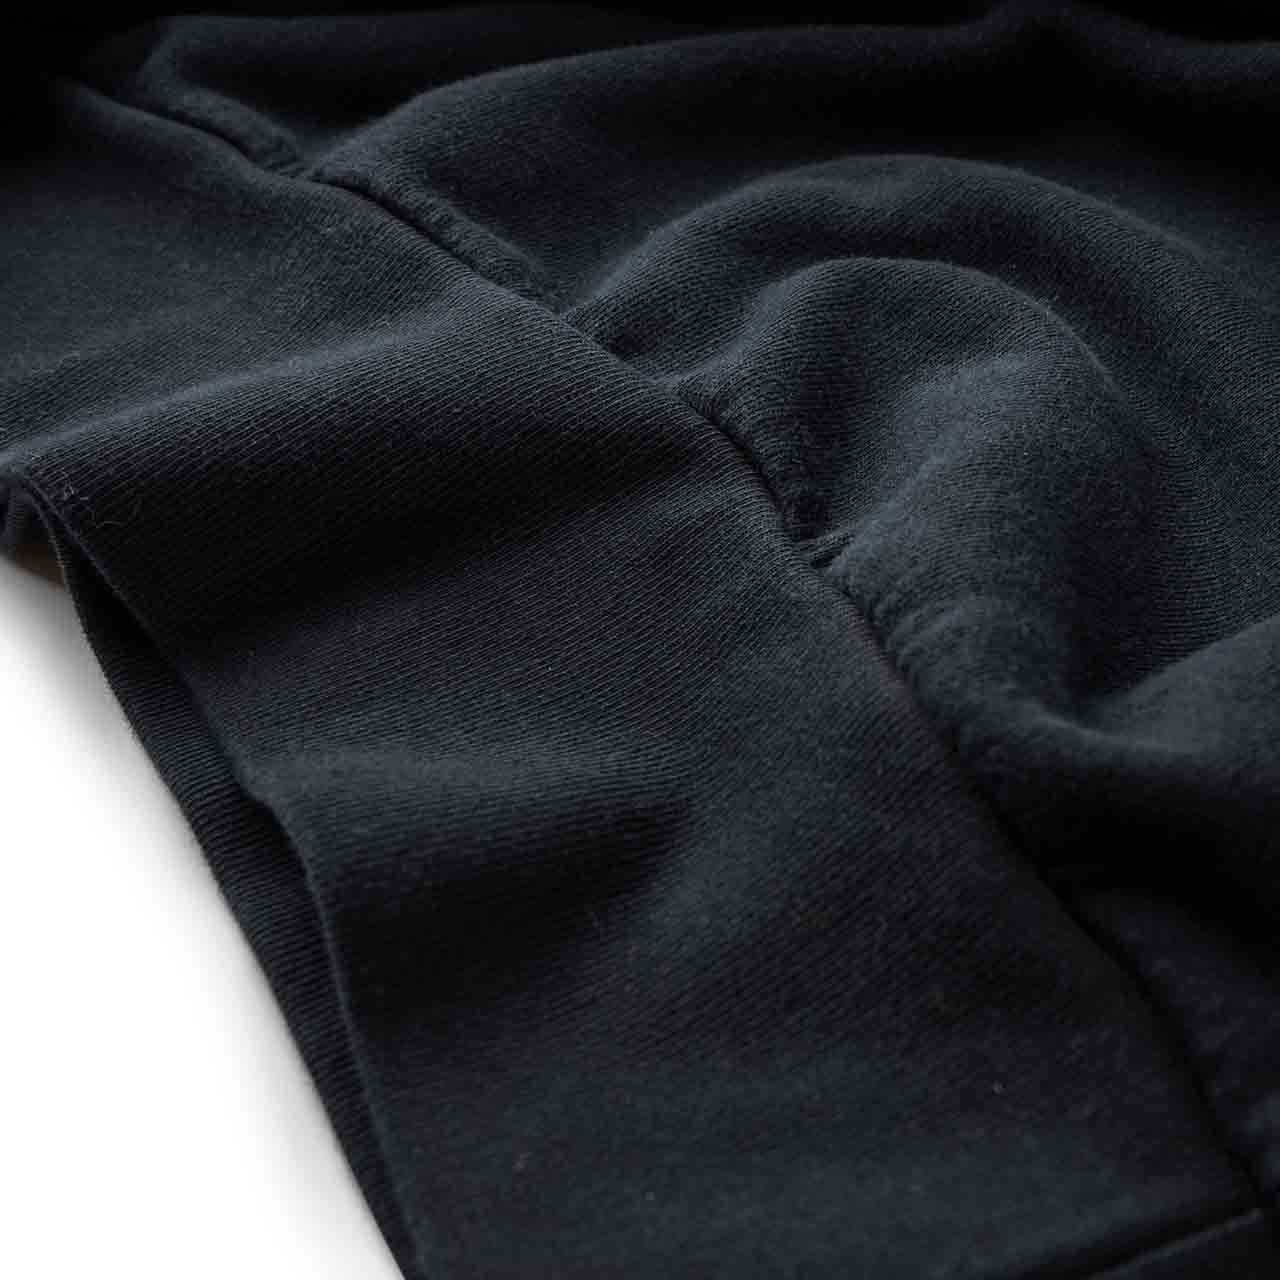 aries 2 chains hoodie (black / grey) - fqar20008-blk - a.plus - Image - 5